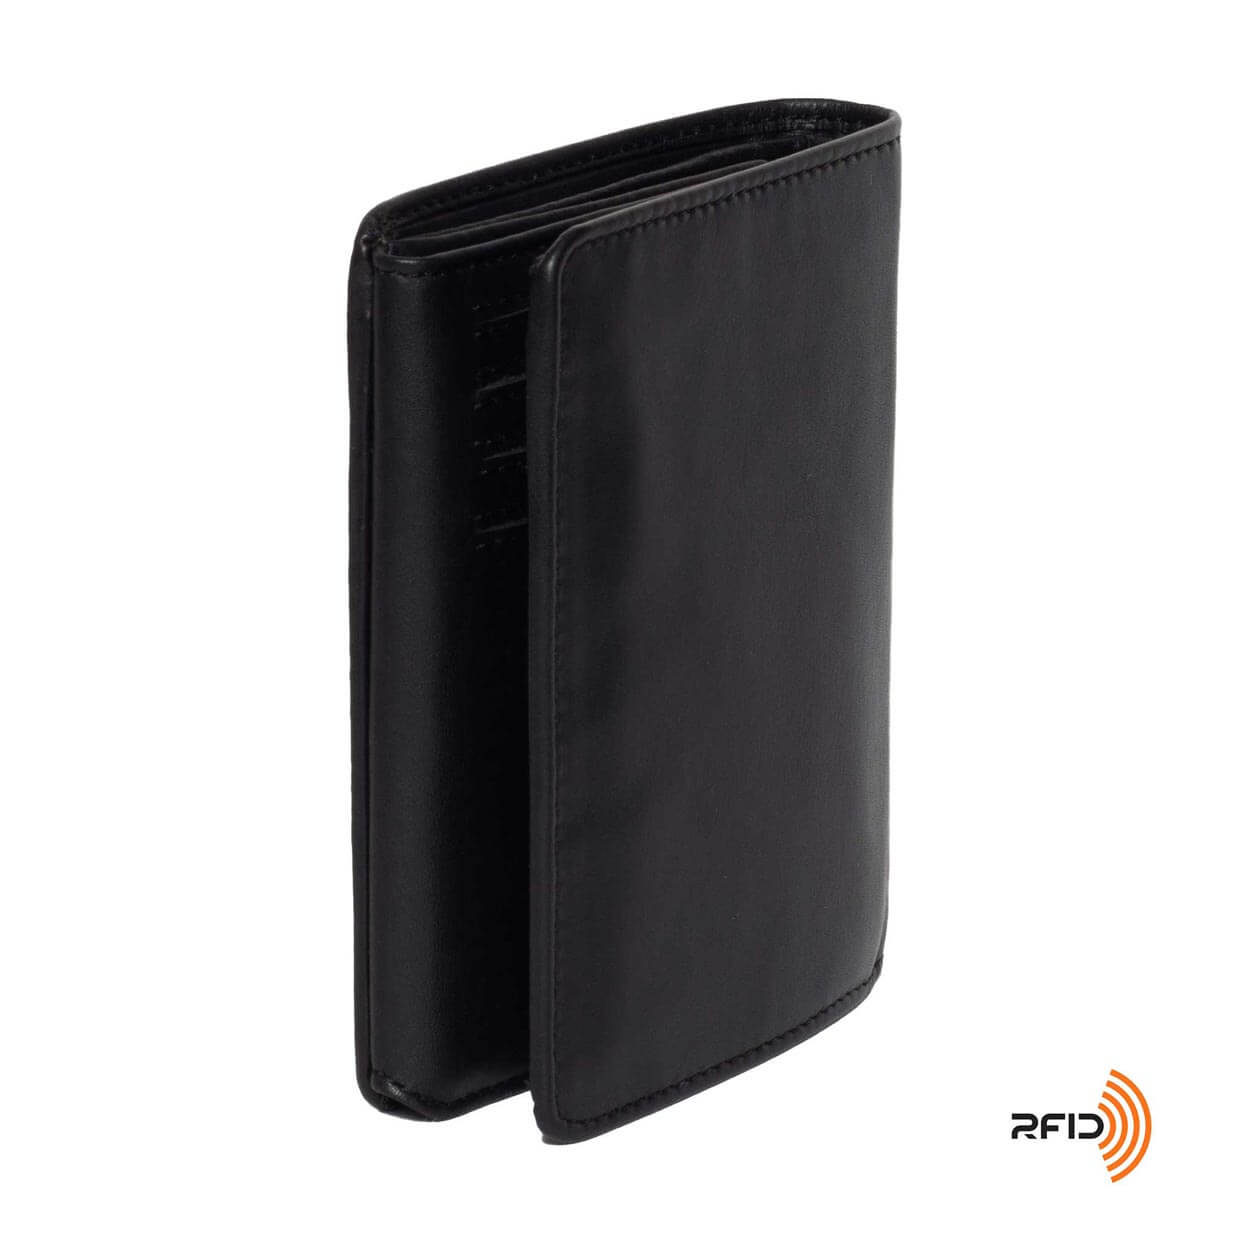 DiLoro Men's Large Leather Wallet 2.0 Vertical Bifold Coin RFID Safe Dark Brown